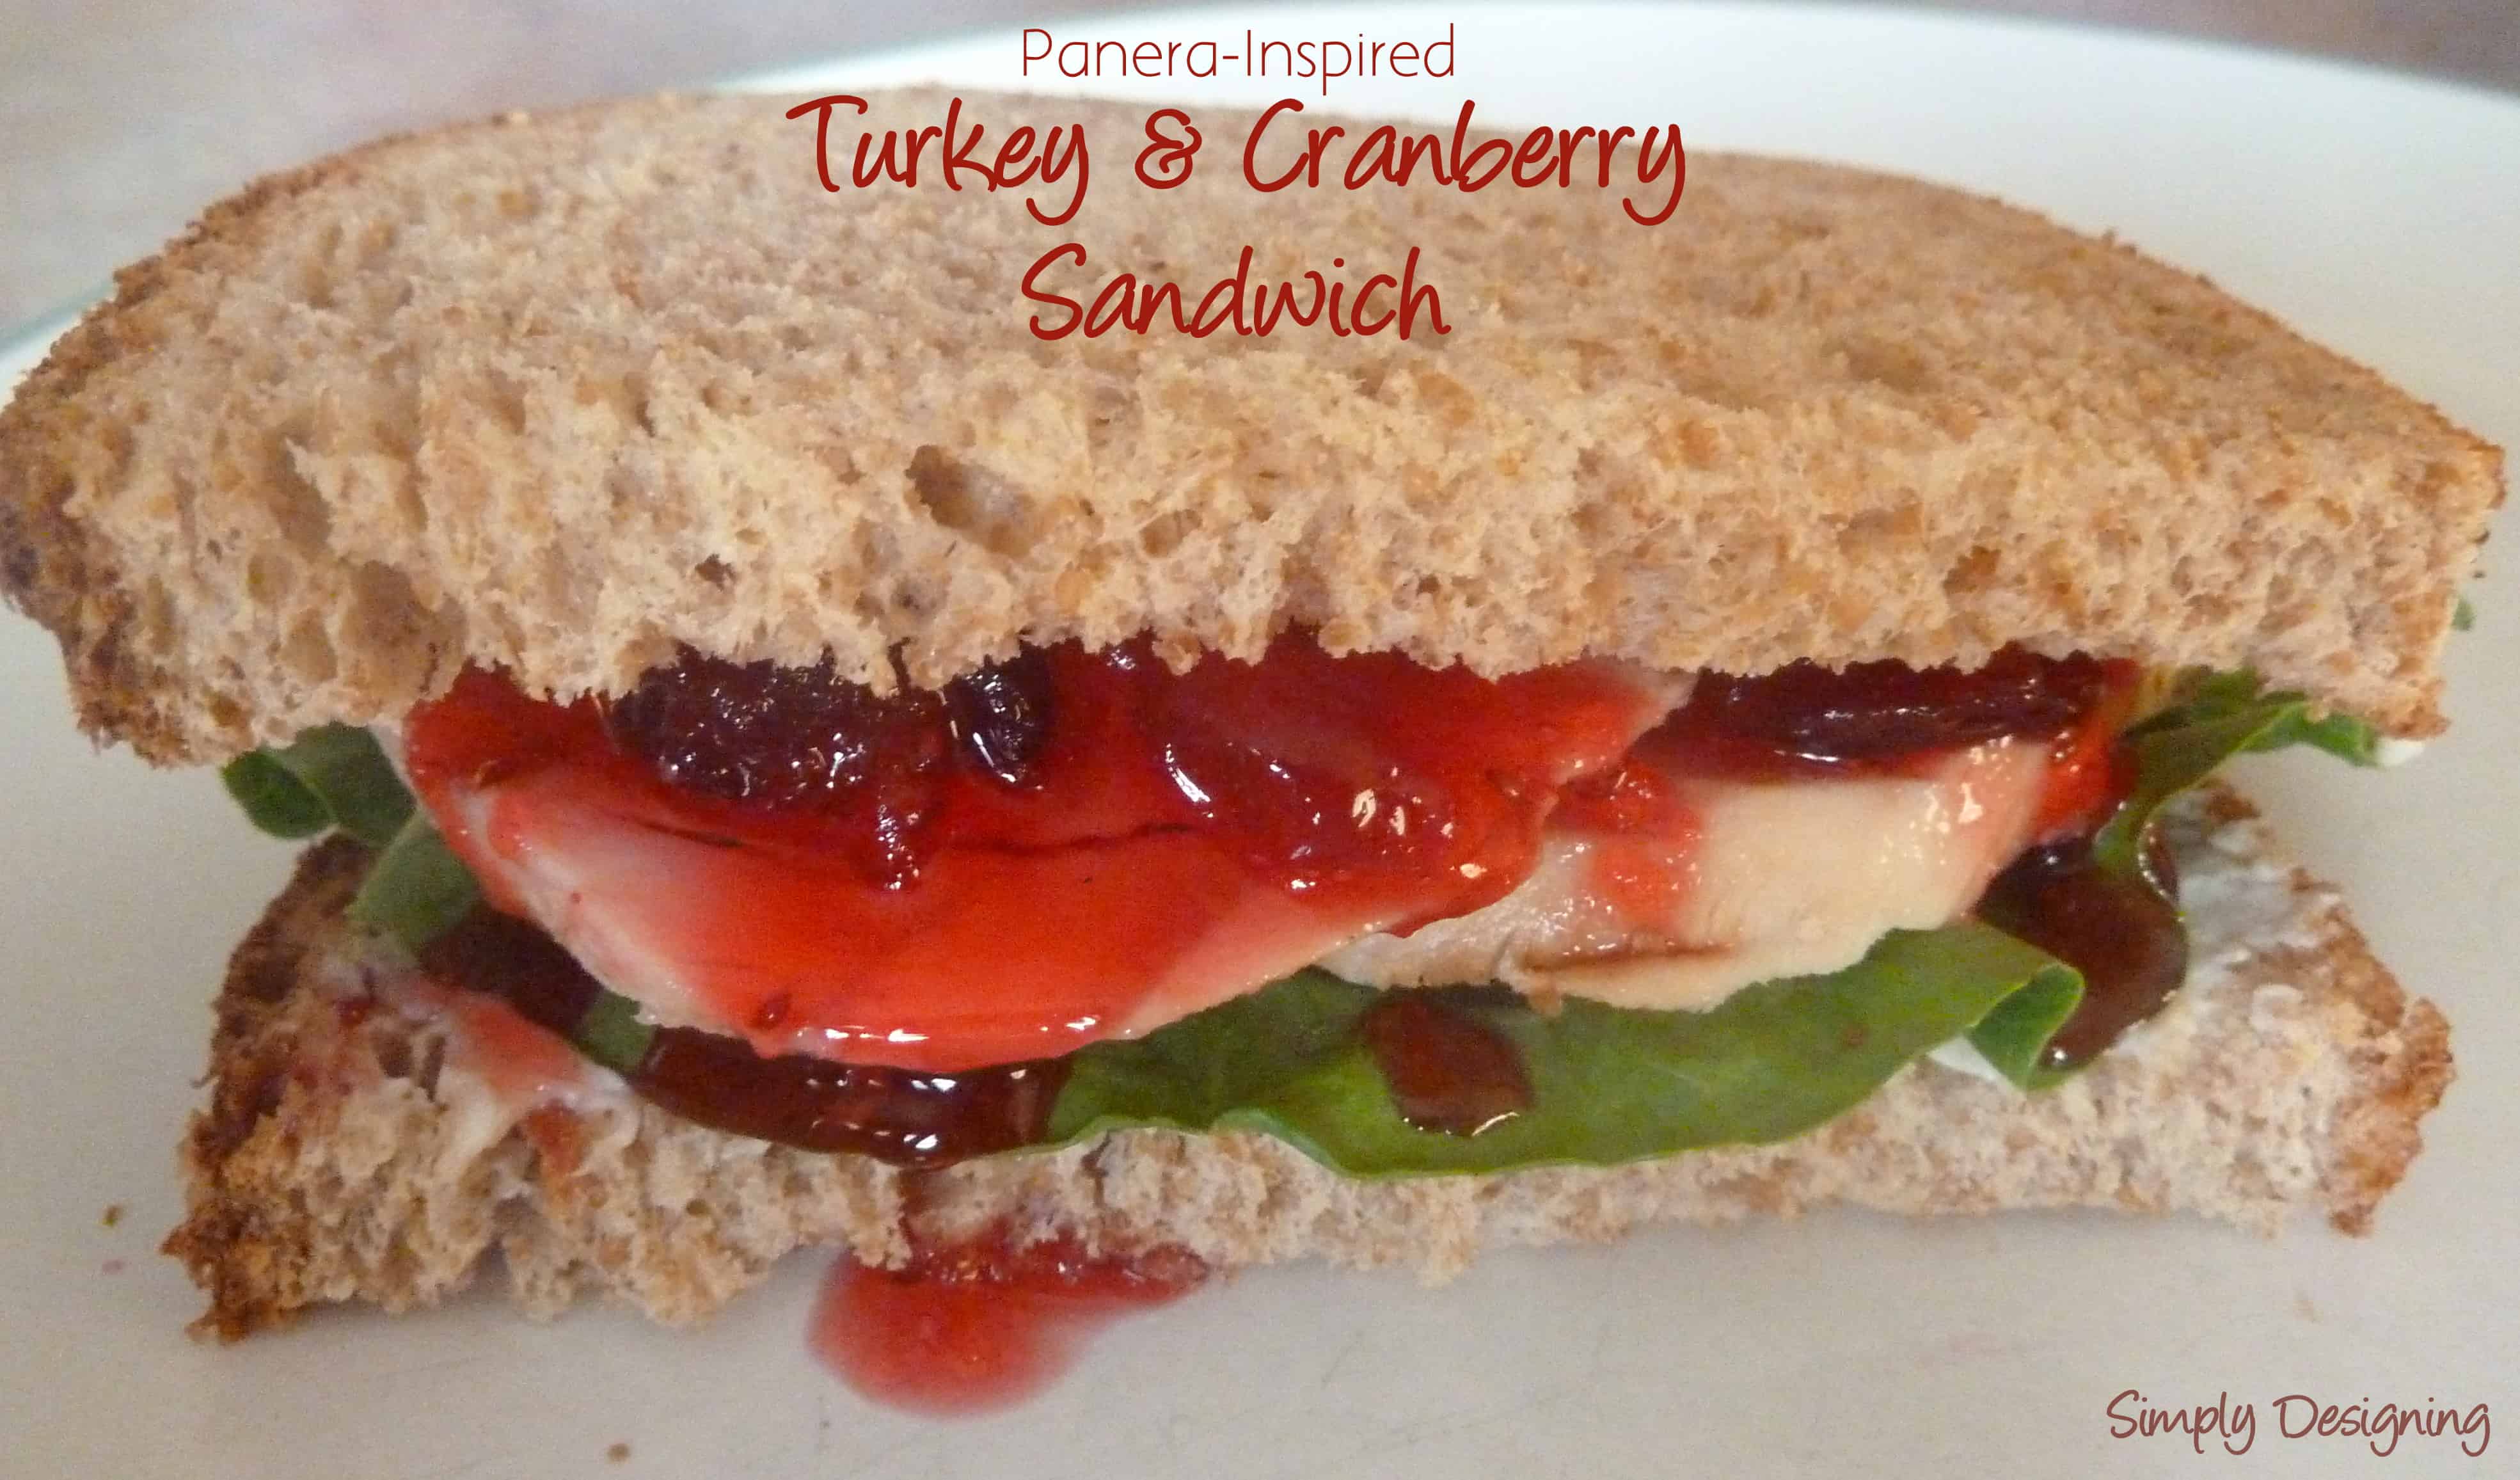 03a Turkey & Cranberry Sandwich 7